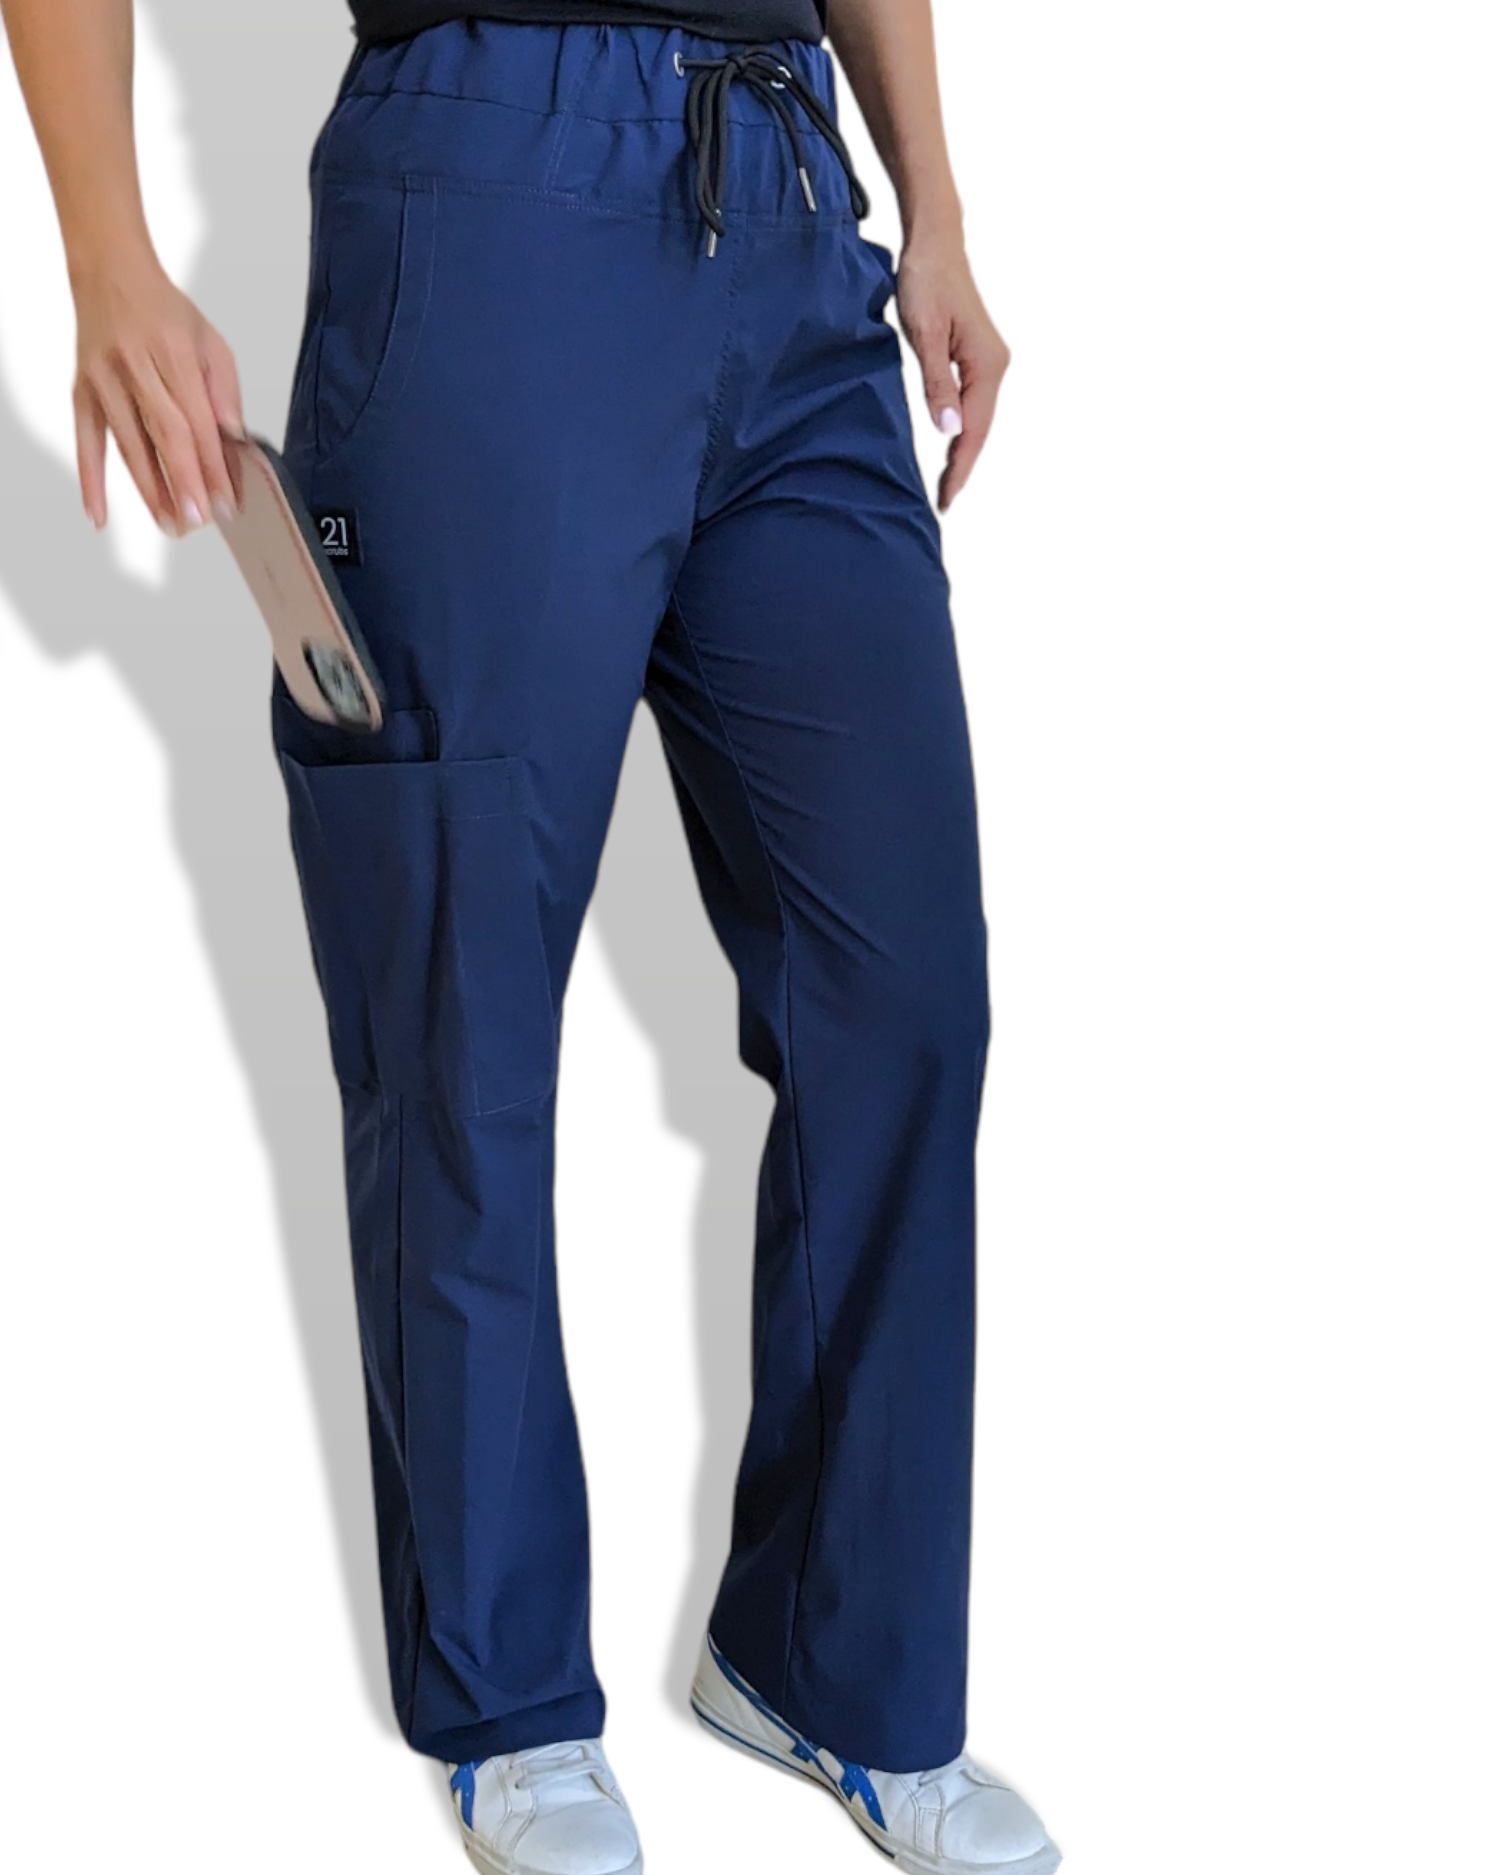 Navy blue scrub pants